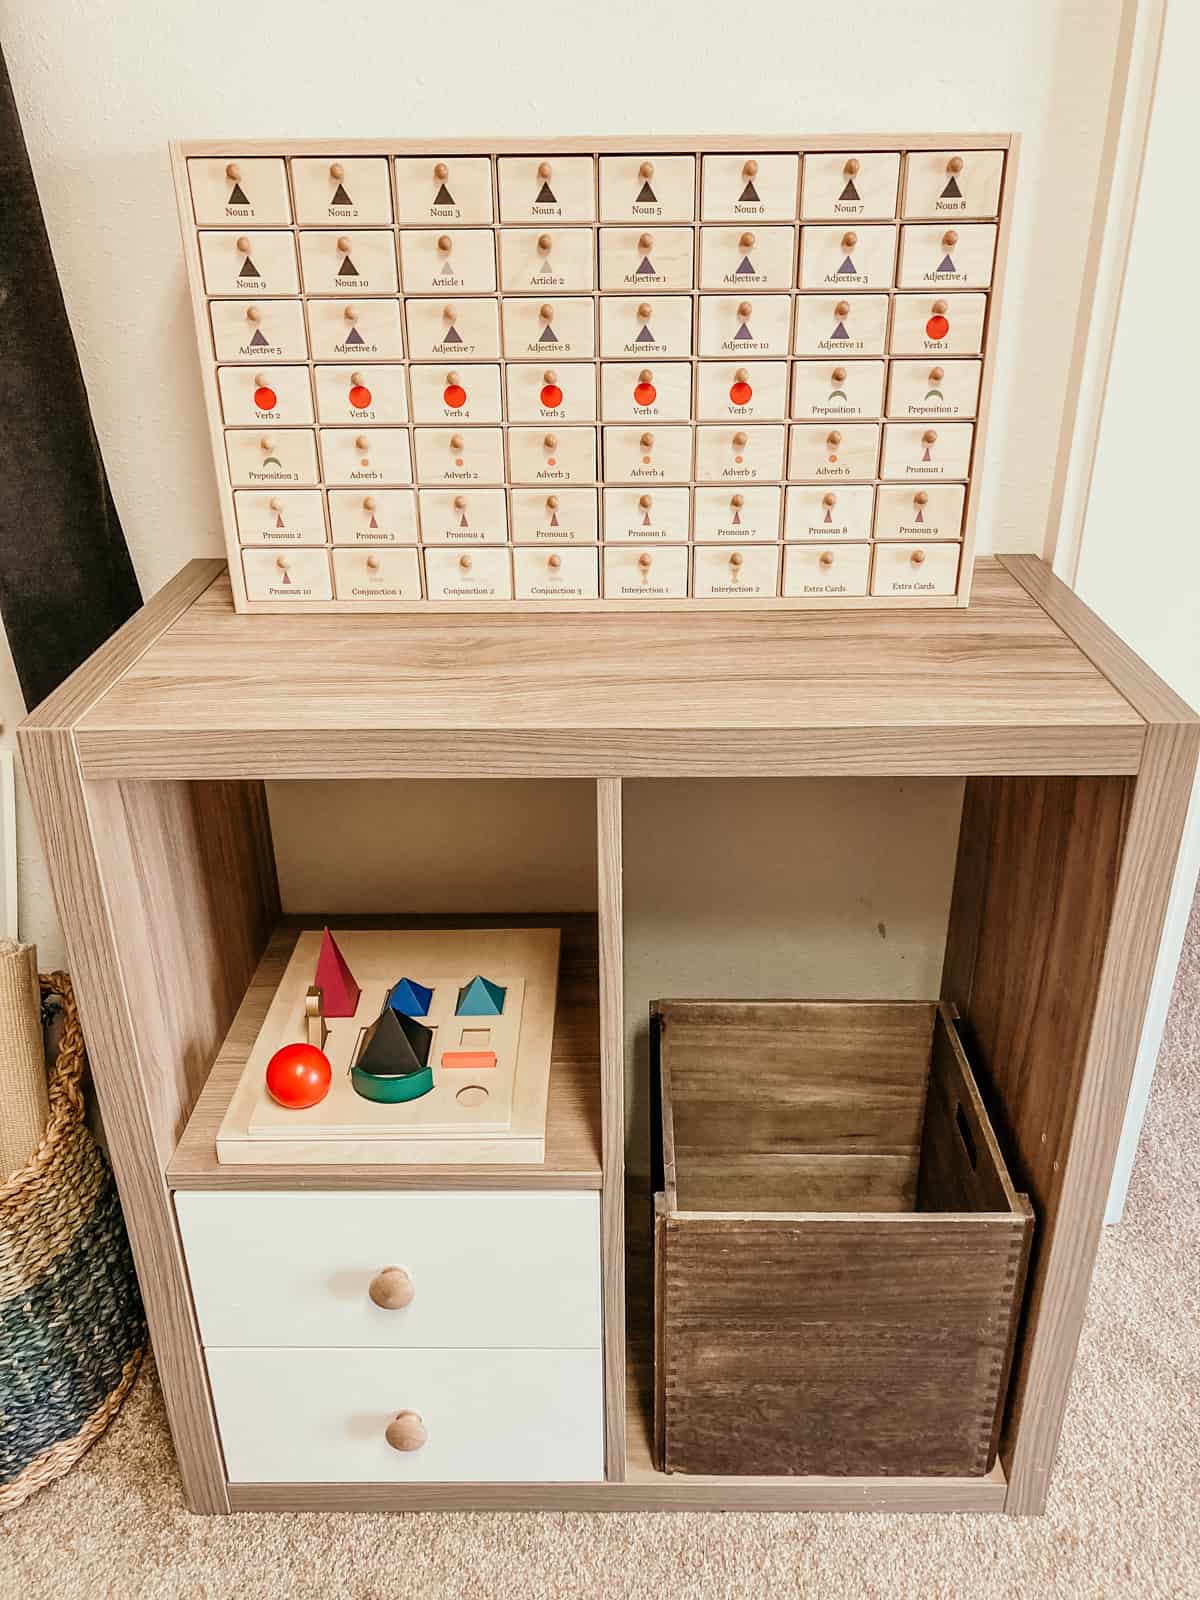 grammar materials in a cabinet sitting on a shelf of a Montessori homeschool room